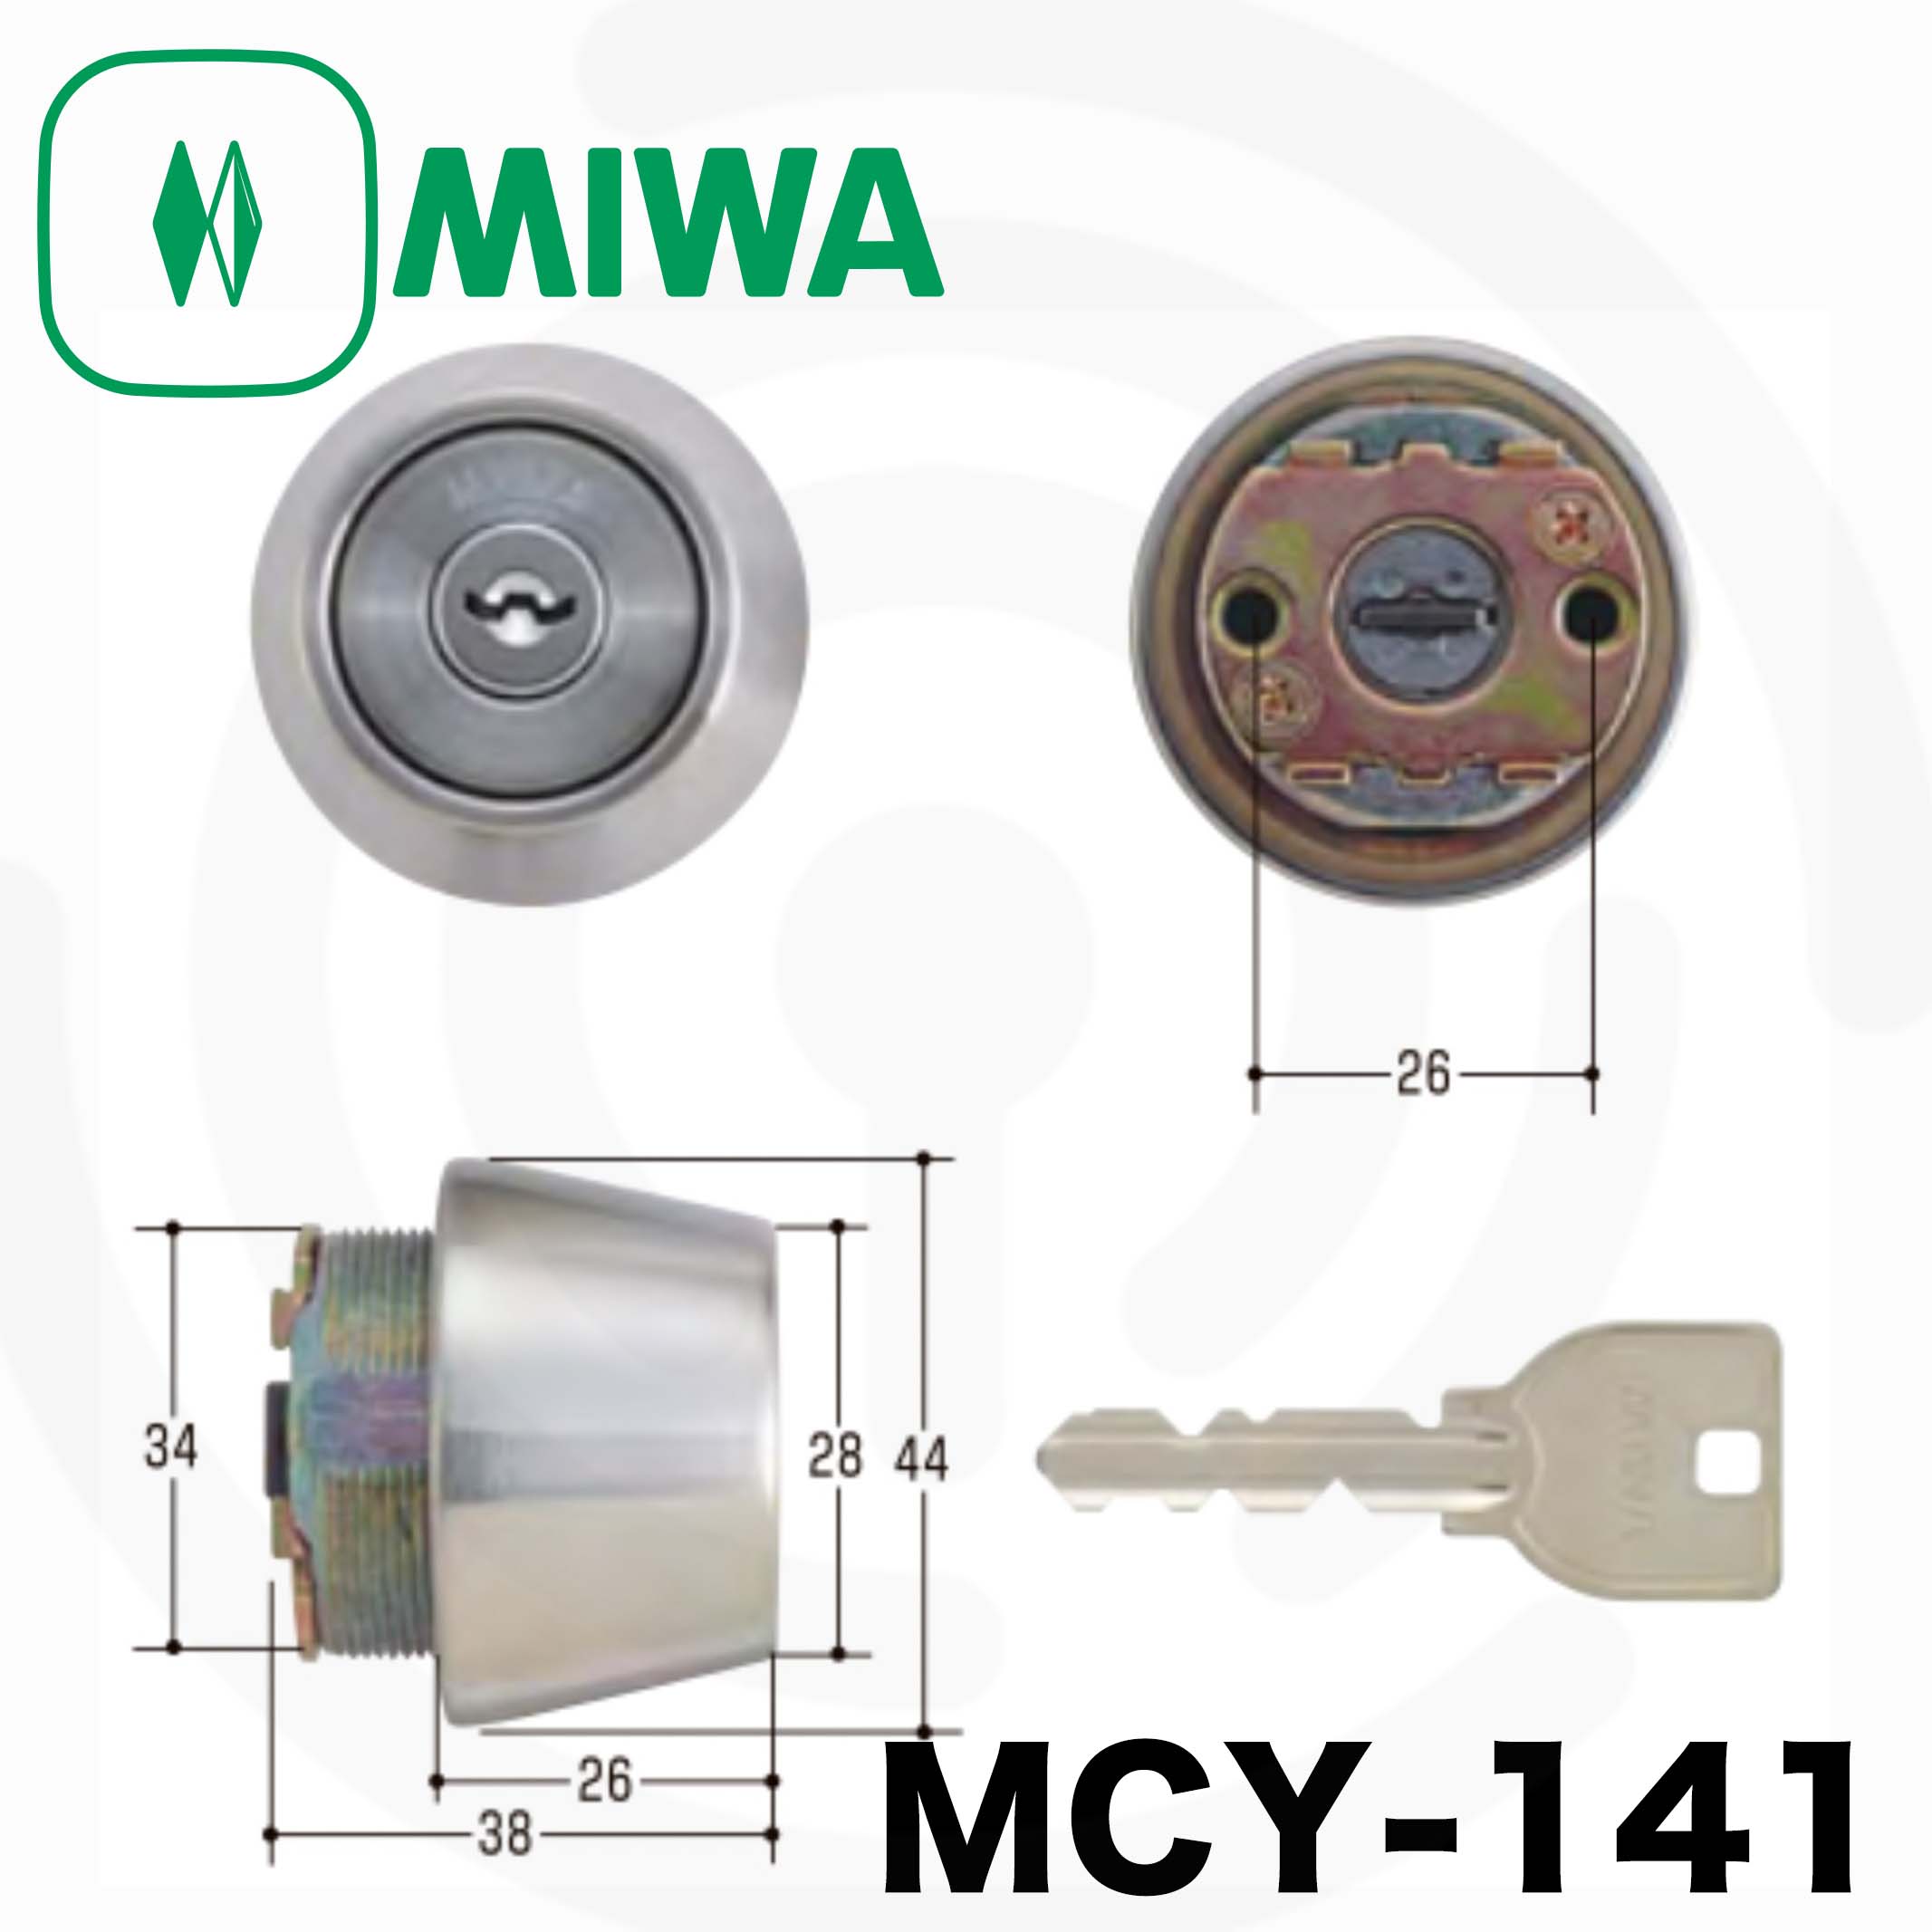 MIWA(美和ロック) U9シリンダー LSPタイプ TE22 鍵 交換 取替え MCY